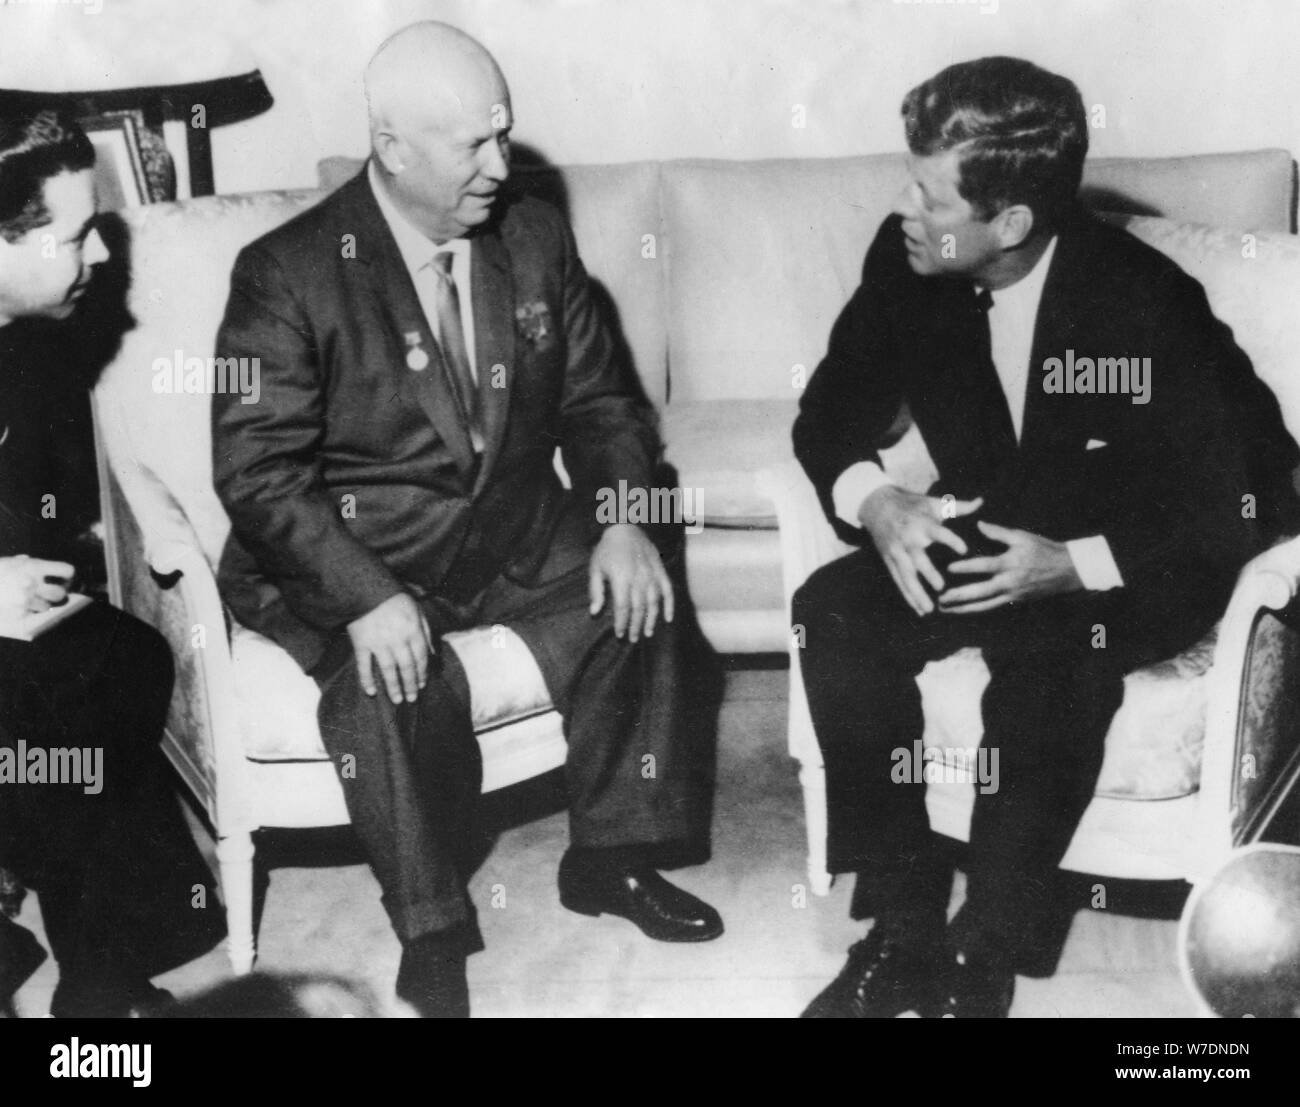 Präsident John F. Kennedy und Nikita Chruschtschow an der US-Botschaft,  Wien, Österreich, 1961. Artist: Unbekannt Stockfotografie - Alamy